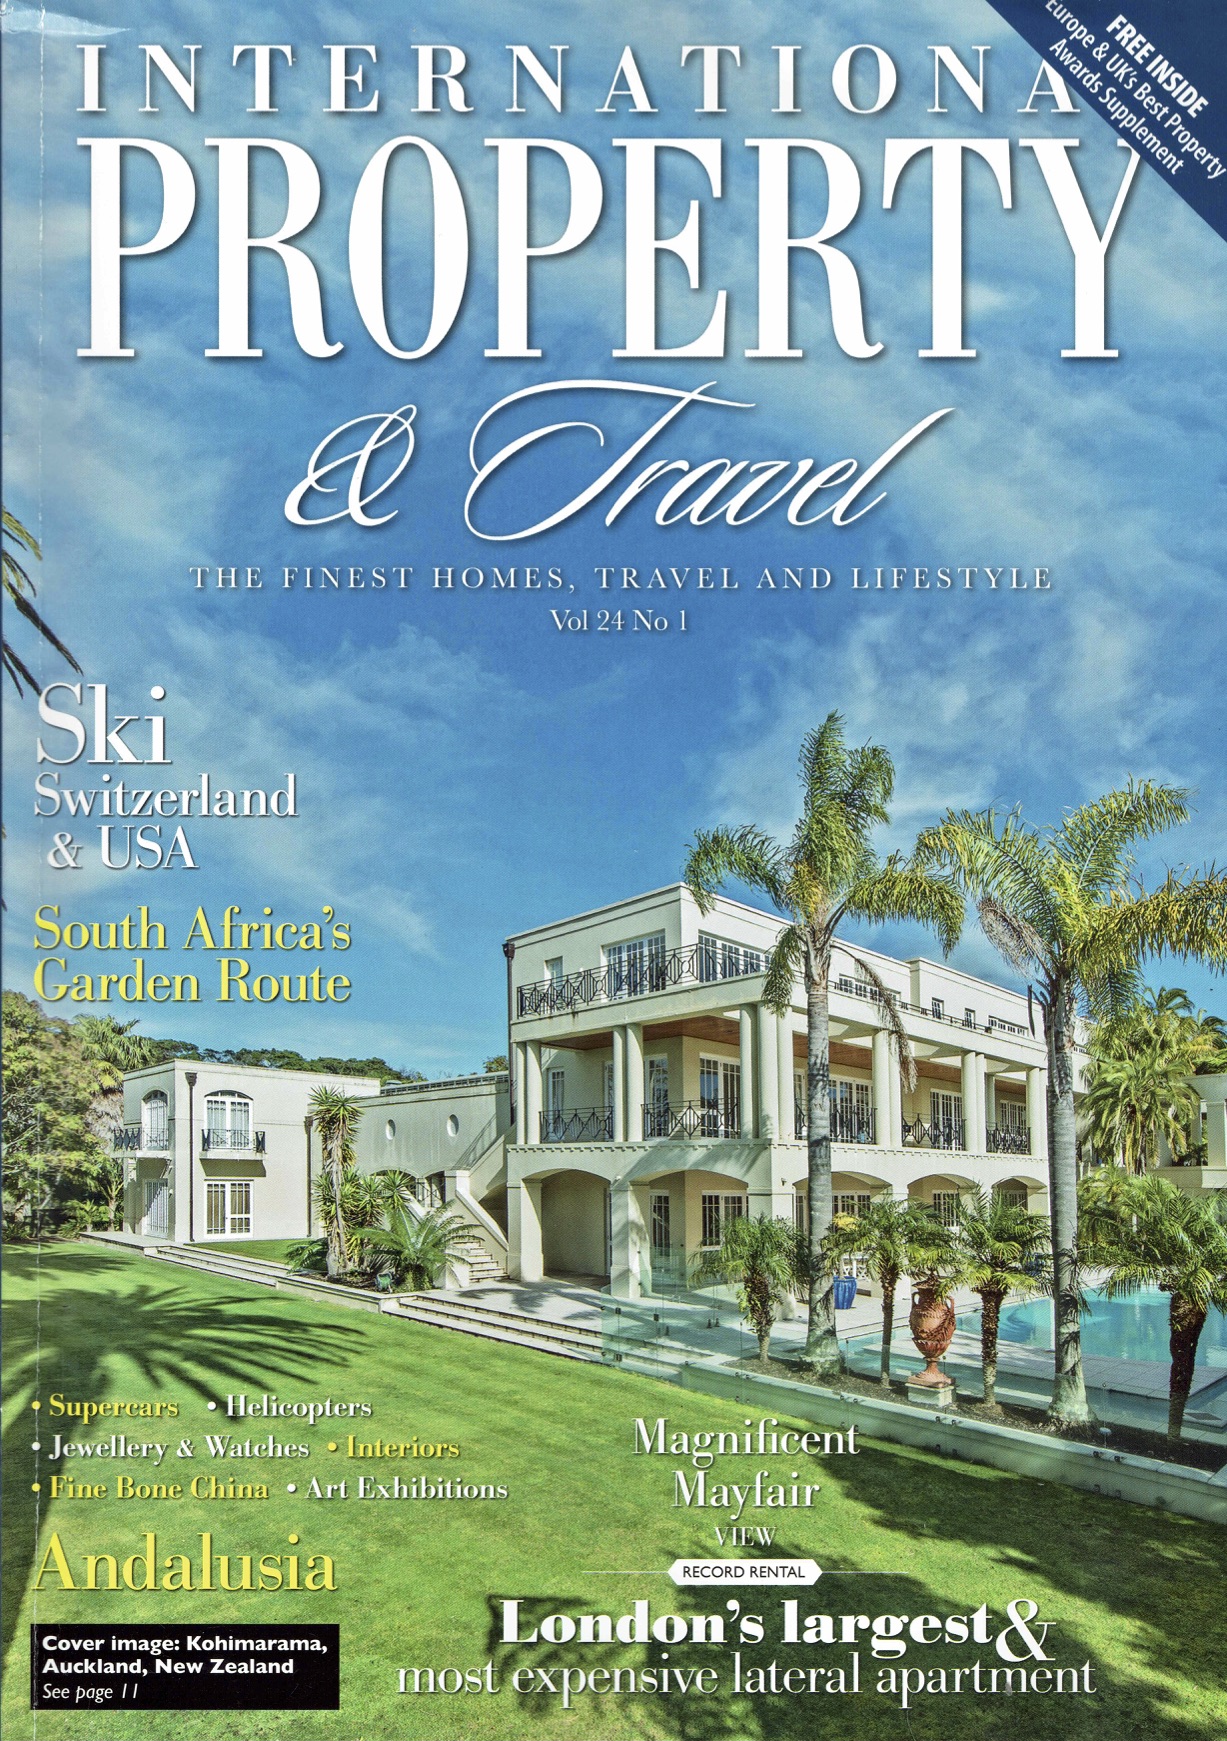 International Property and Travel Magazine – Costa del Sol Property